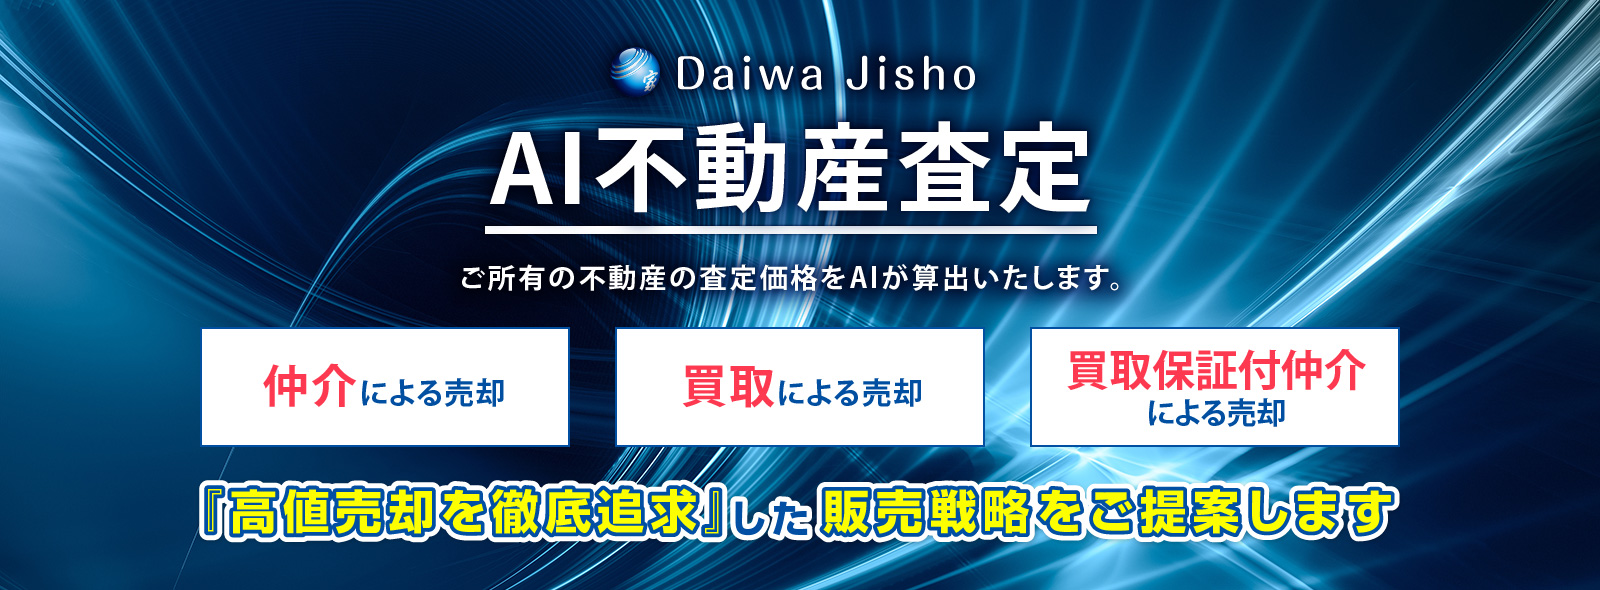 Daiwa jisho AI不動産査定 ご所有の不動産の査定価格をAIが算出いたします。 価格重視で出来るだけ高く売却したい仲介による売却スピード重視で直ぐに資金化したい買取による売却限られた期間内で出来るだけ高く売却したい買取保証付仲介による売却　『高値売却を徹底追求』した販売戦略をご提案します